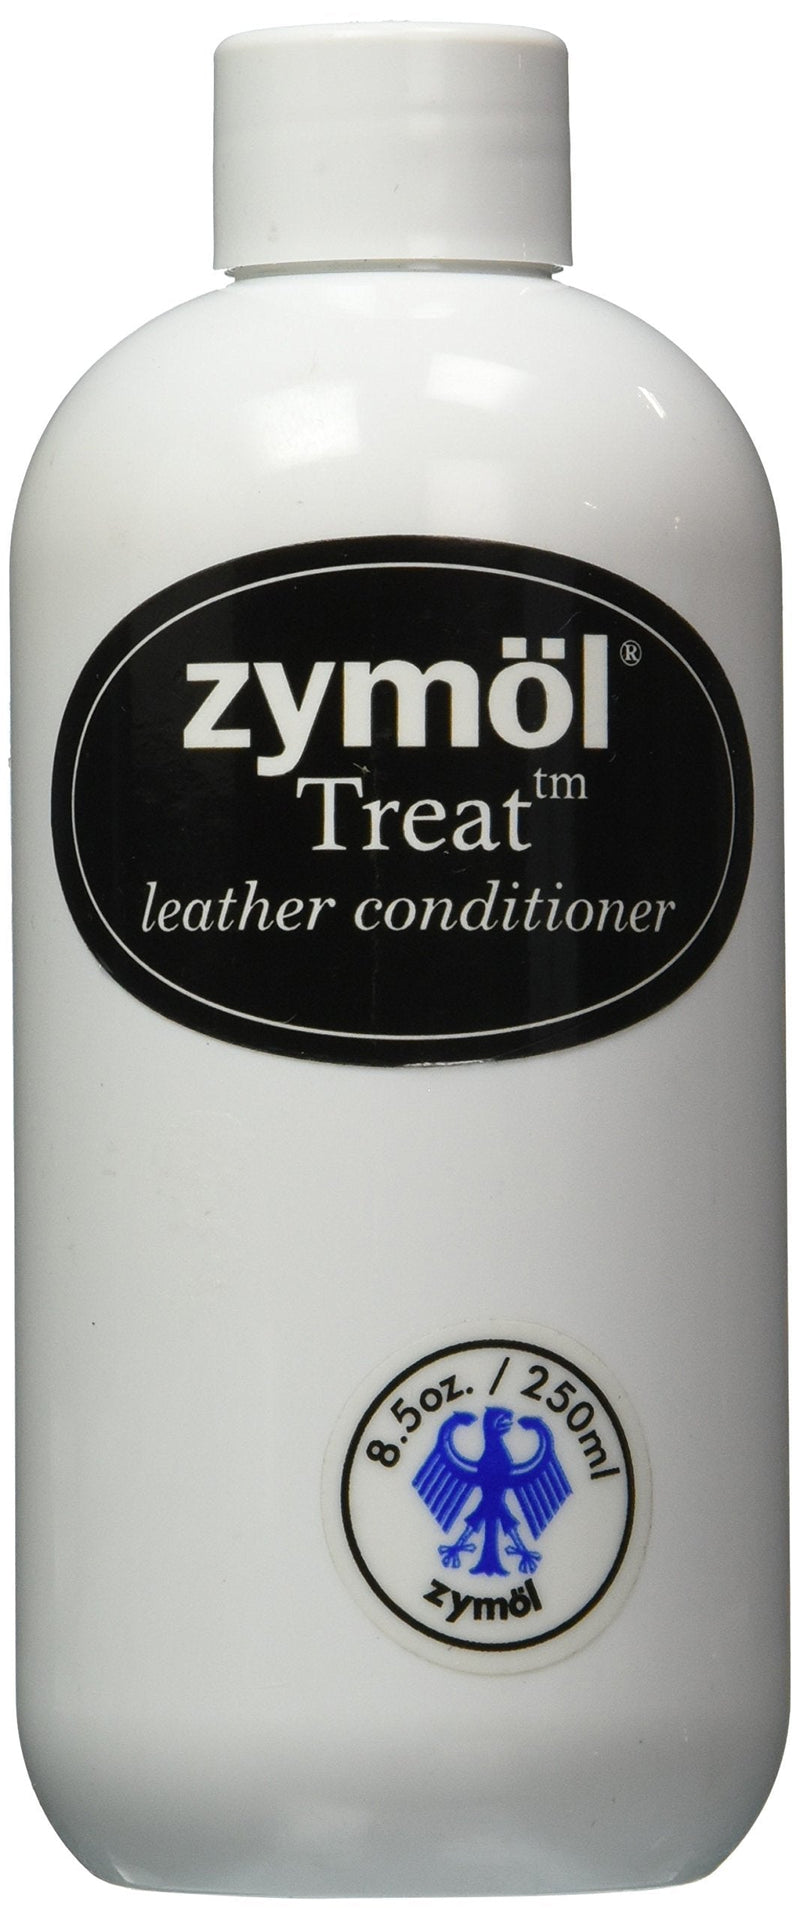  [AUSTRALIA] - Zymol Treat Leather Conditioner - 8.5 oz Bottle